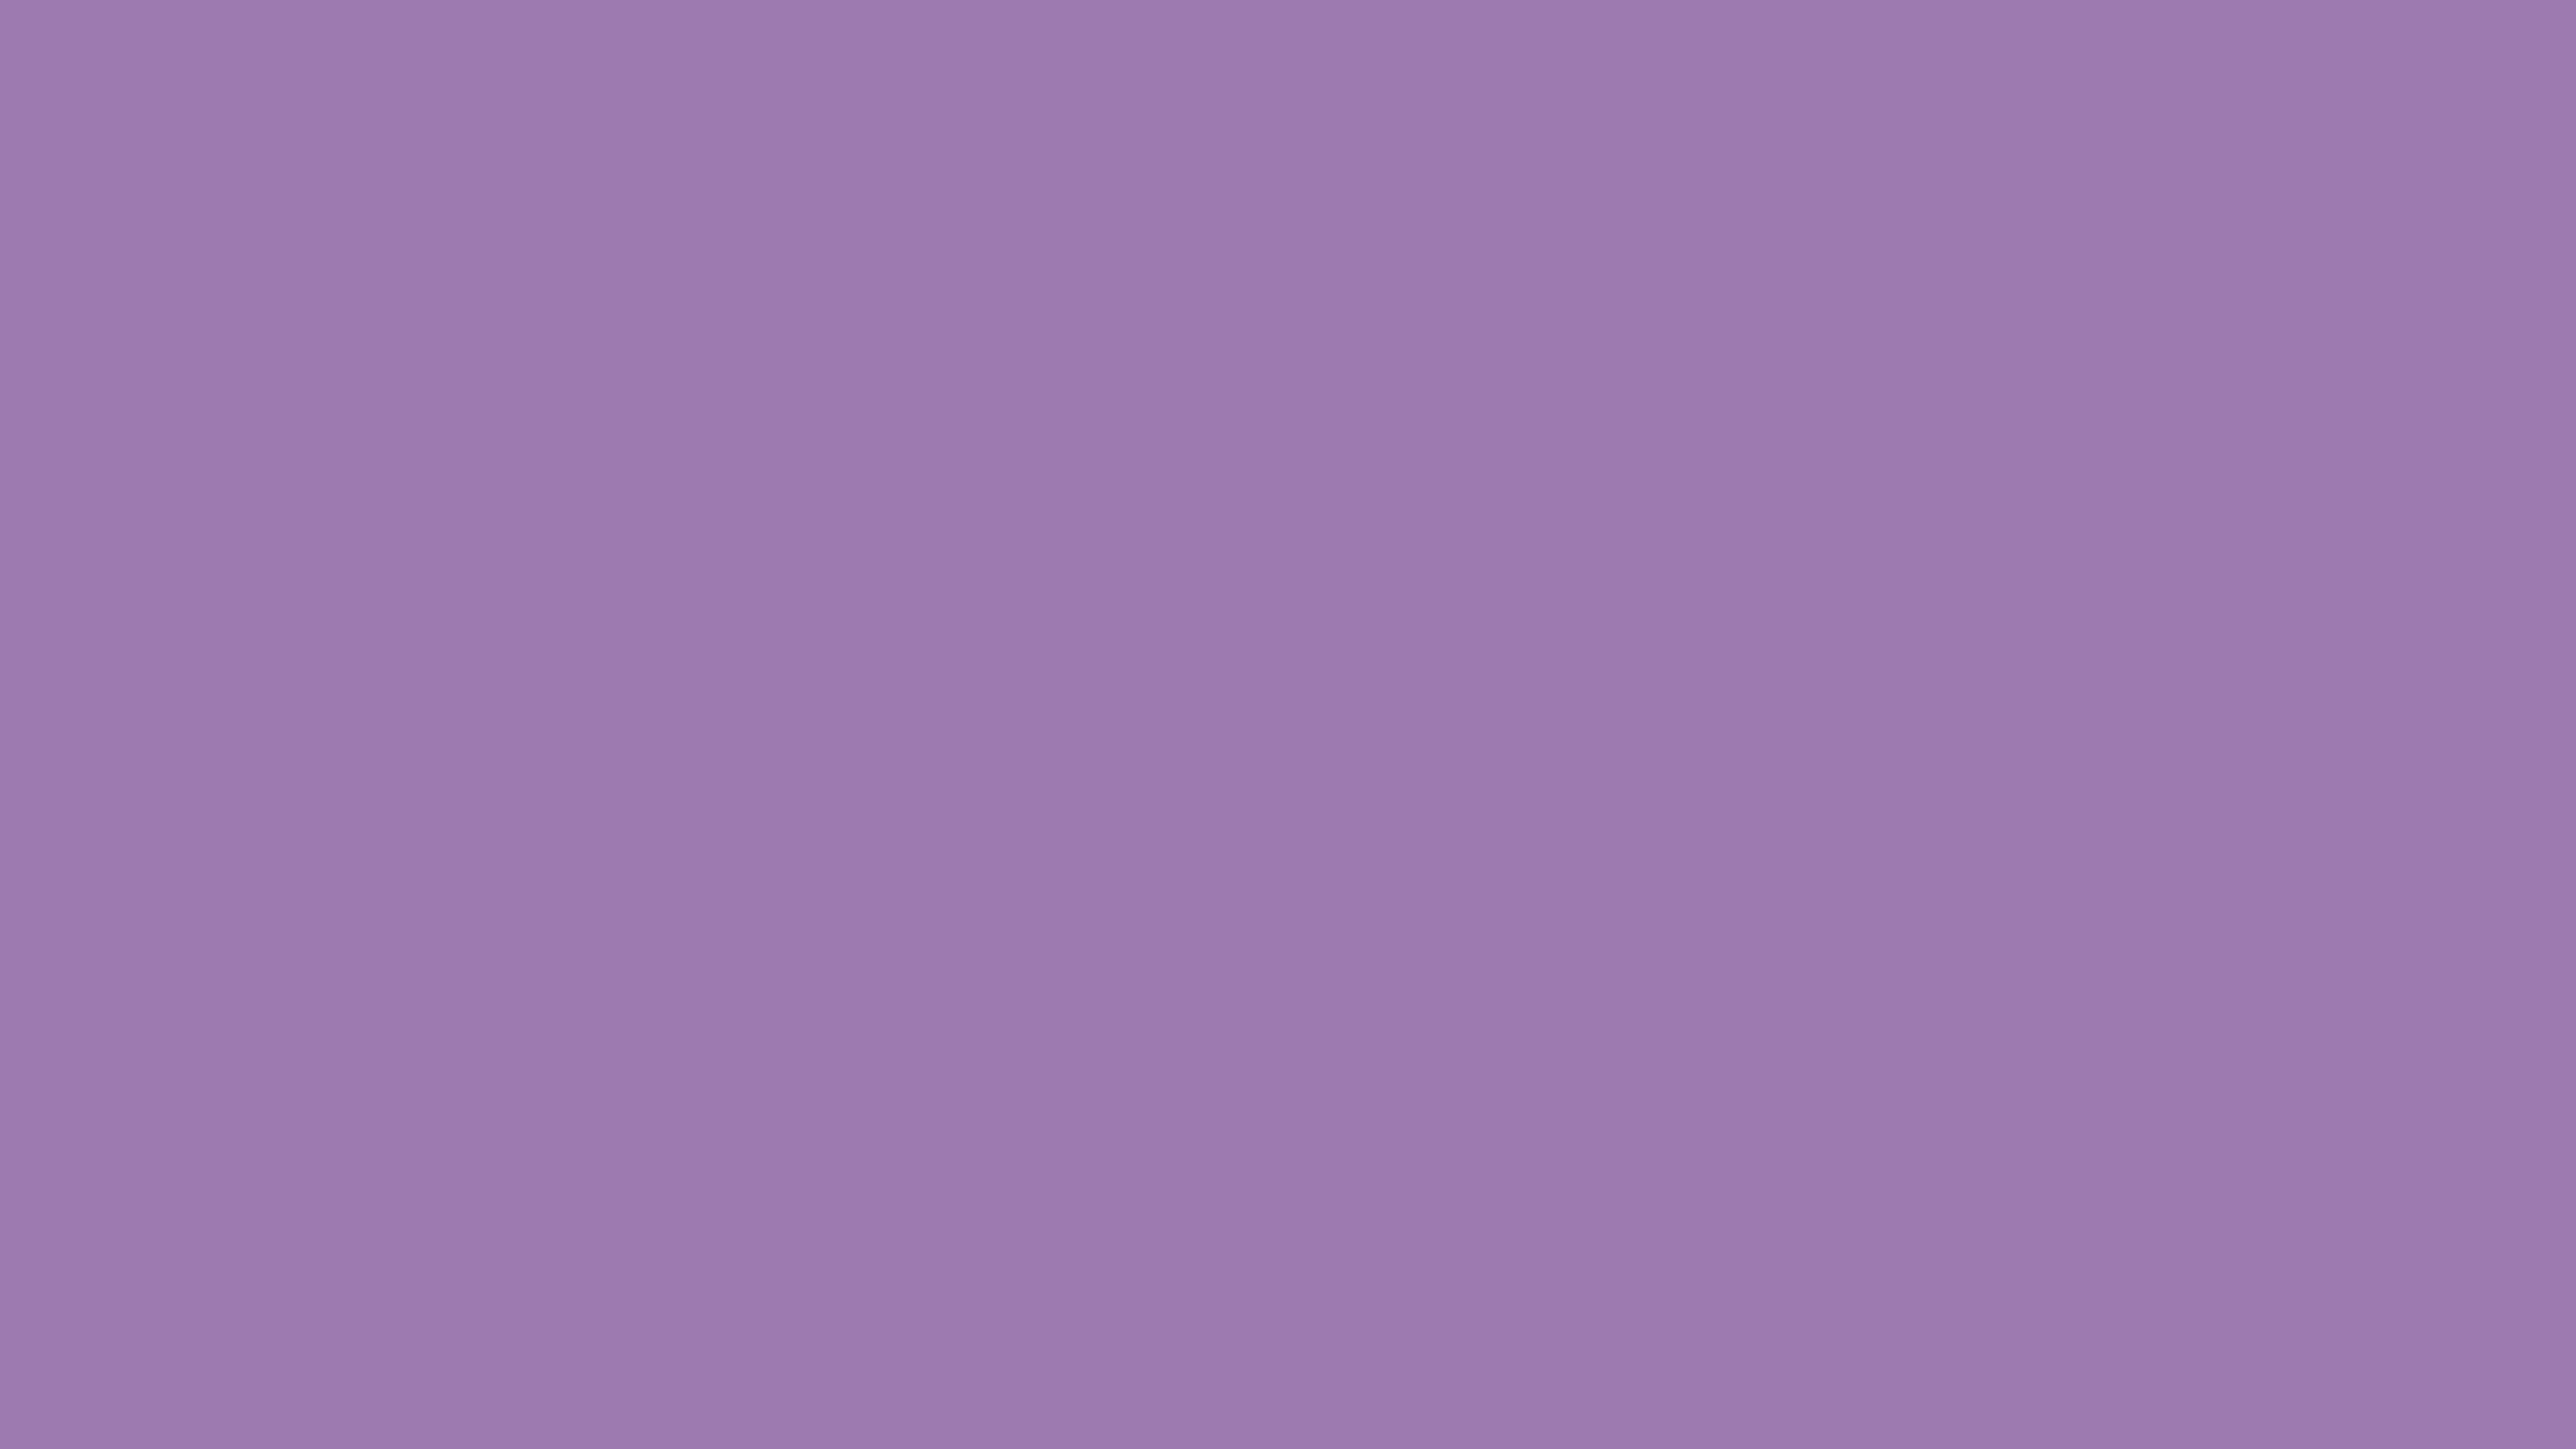 English Lavender Solid Color Background Image | Free Image Generator